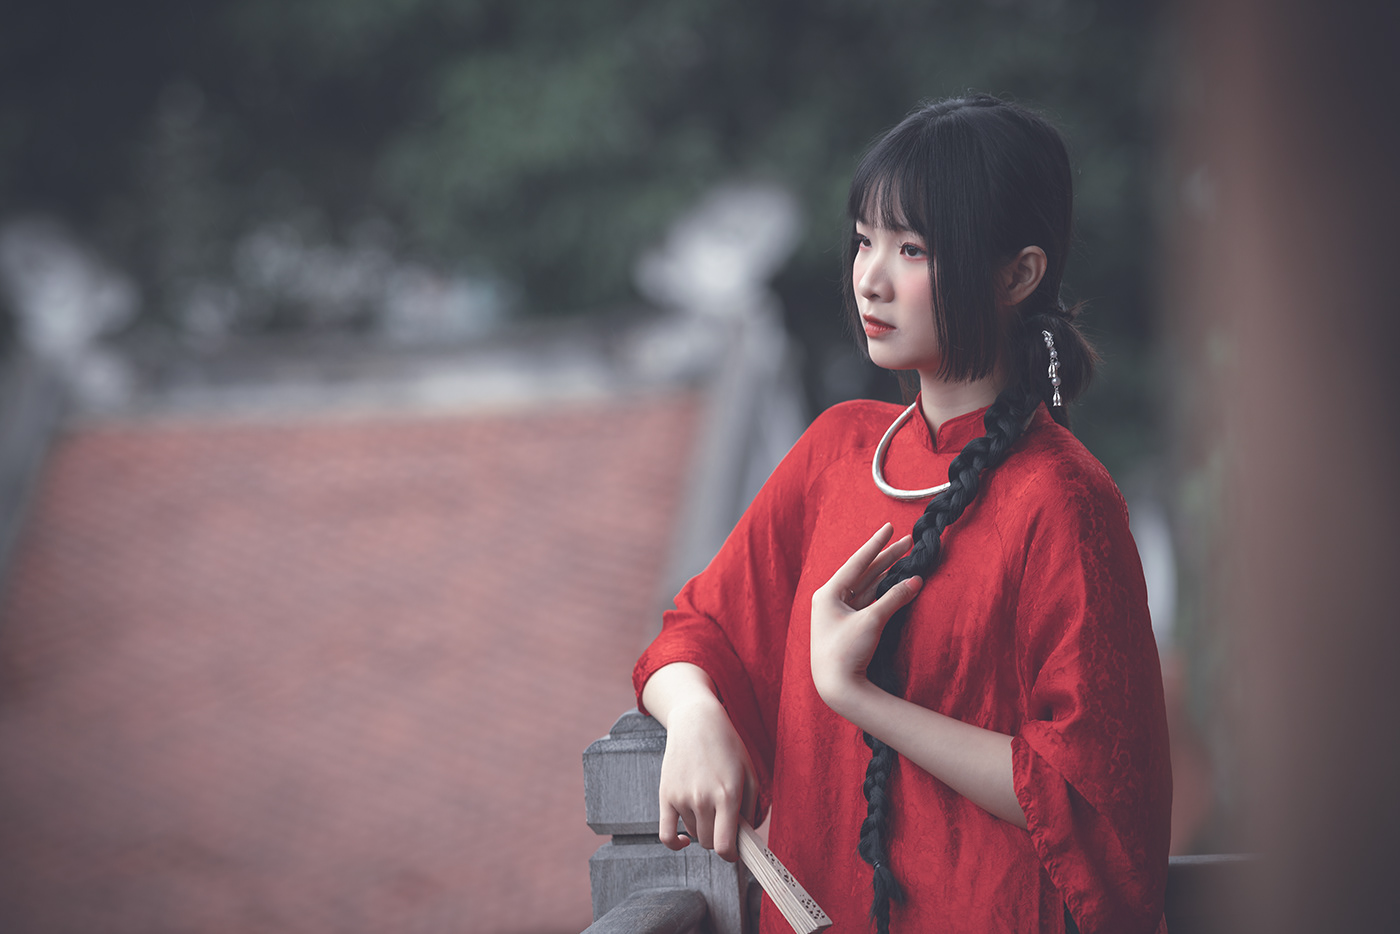 Ao dai vietnamese freelance model photoshoot